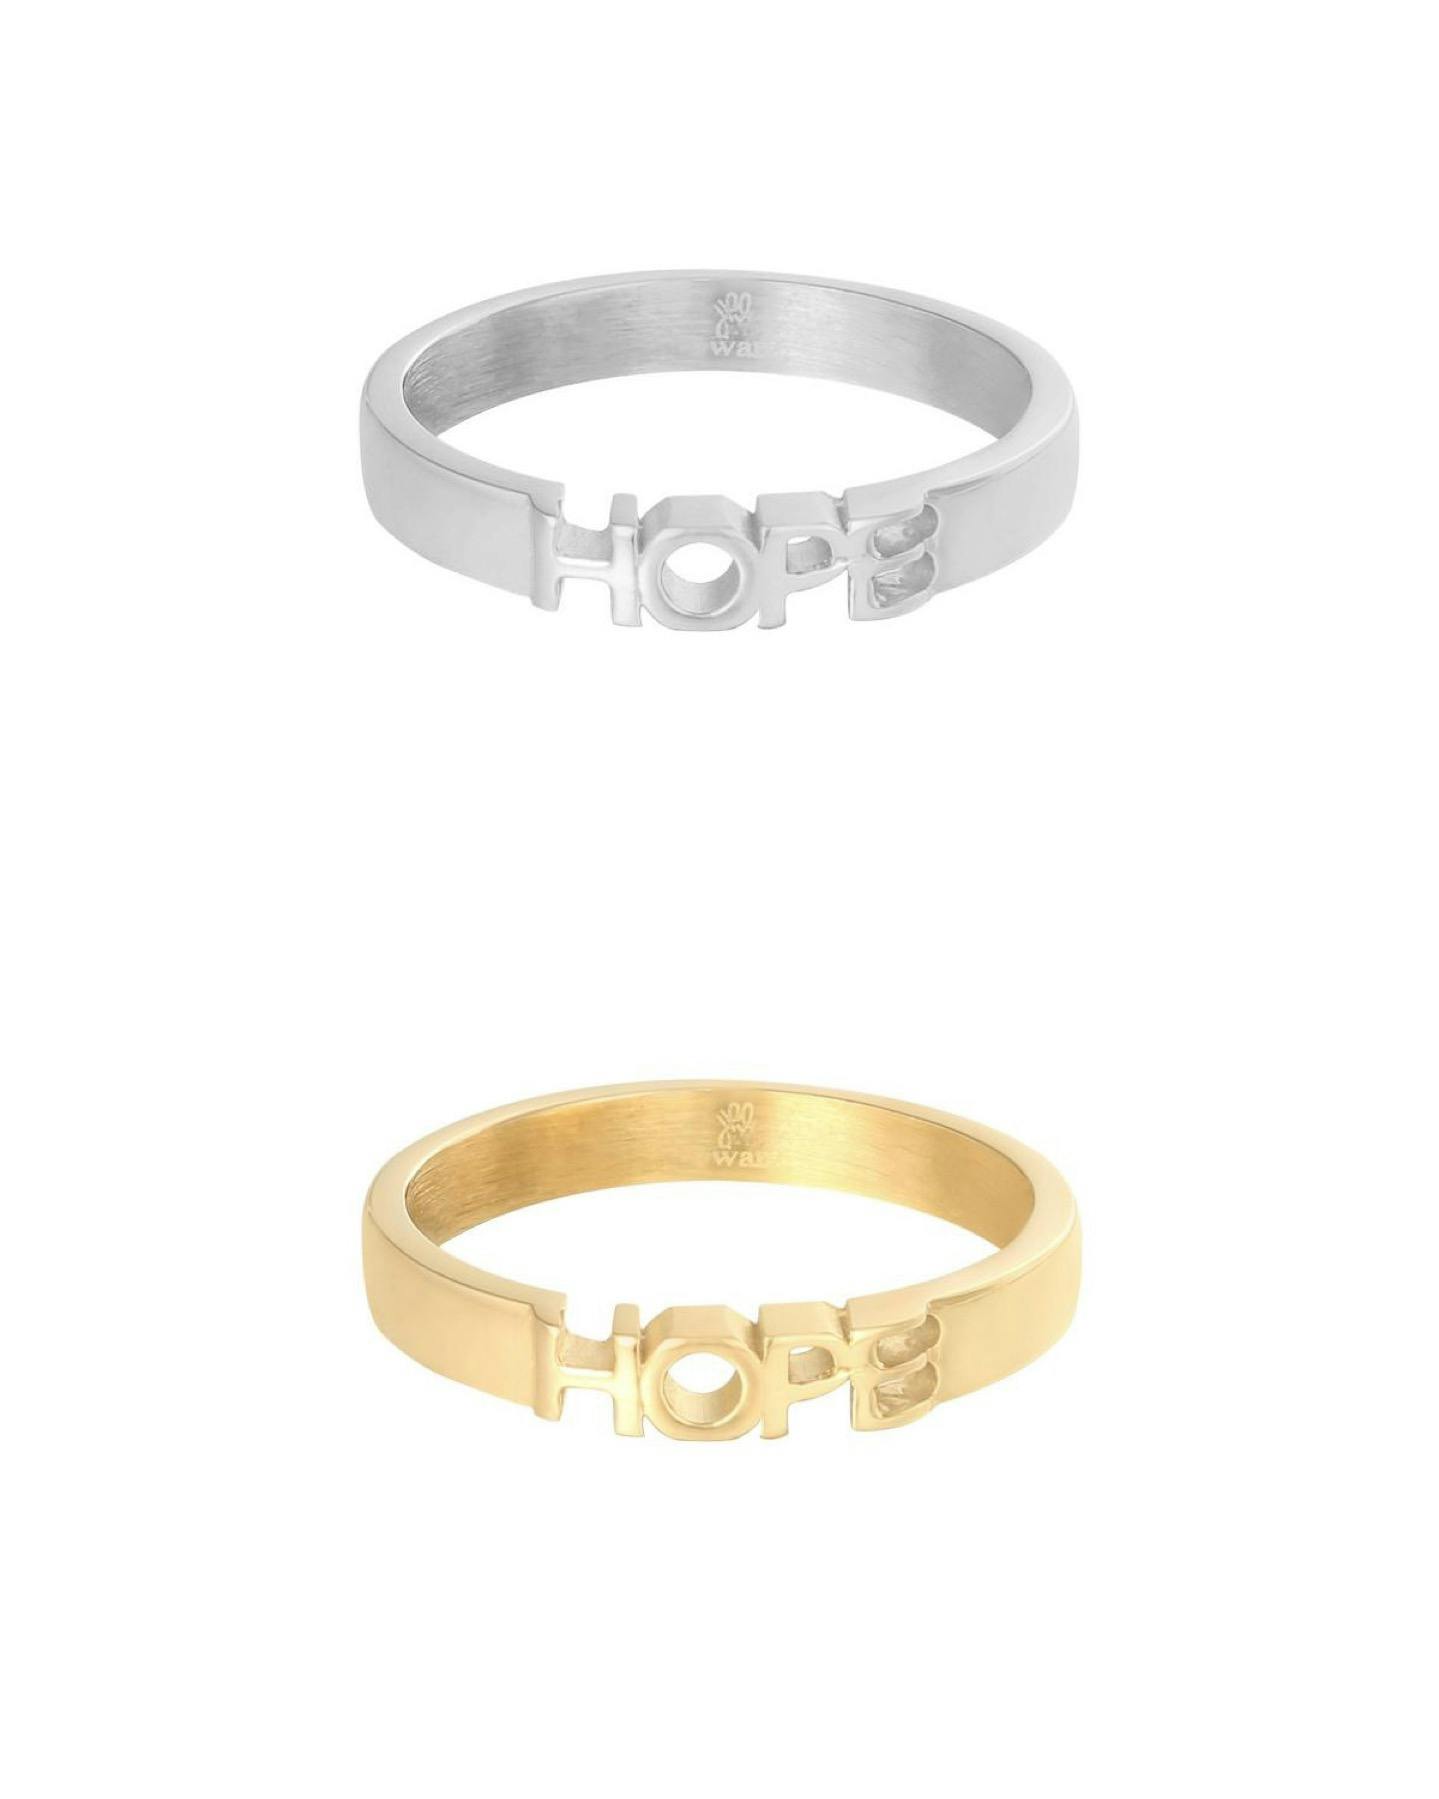 Hope ring